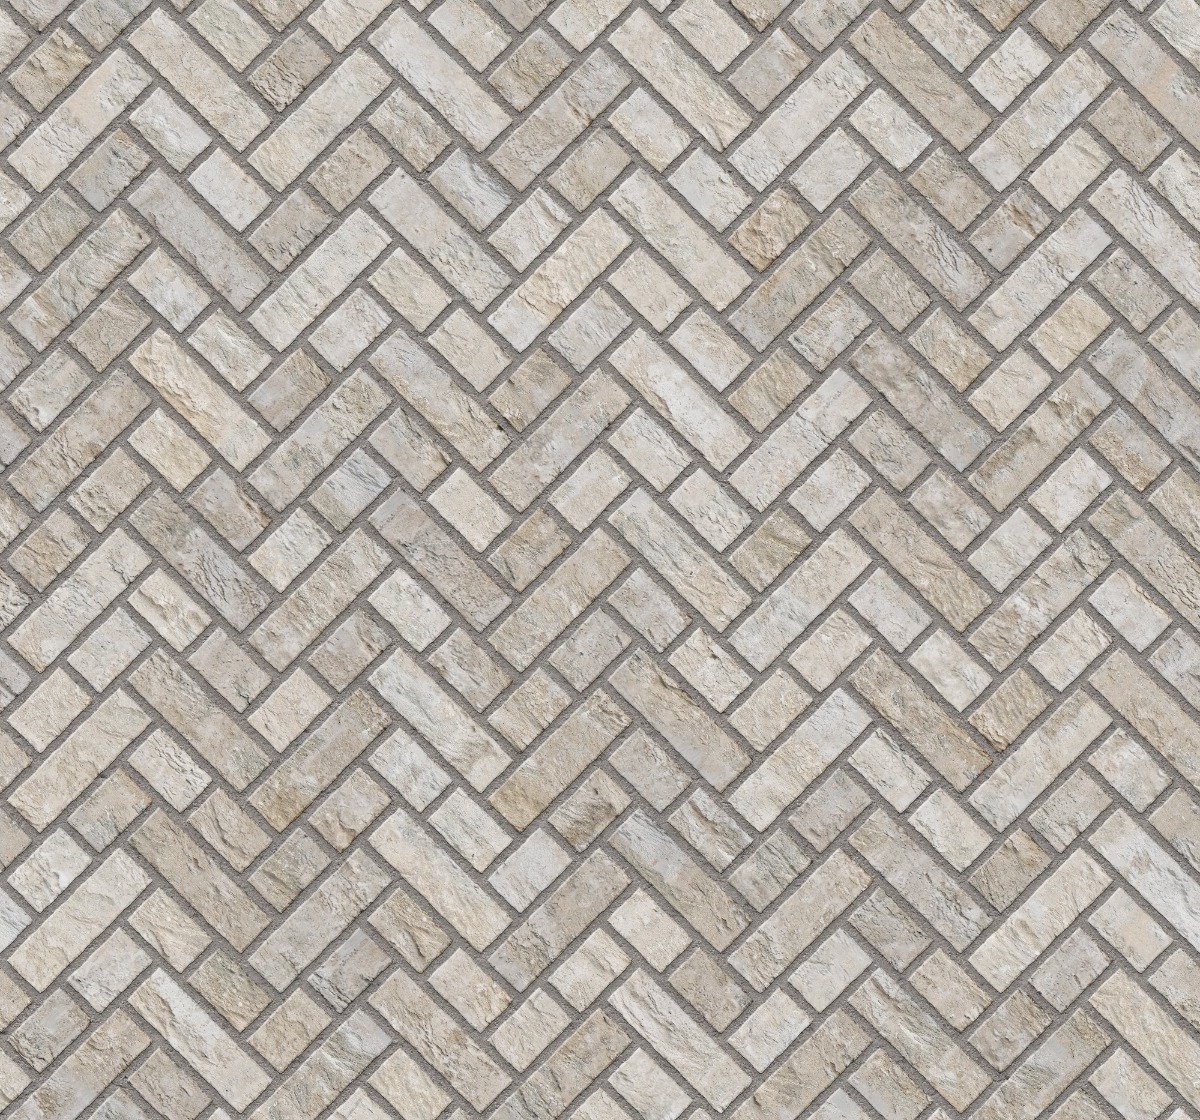 A seamless brick texture with buff units arranged in a Broken Herringbone pattern